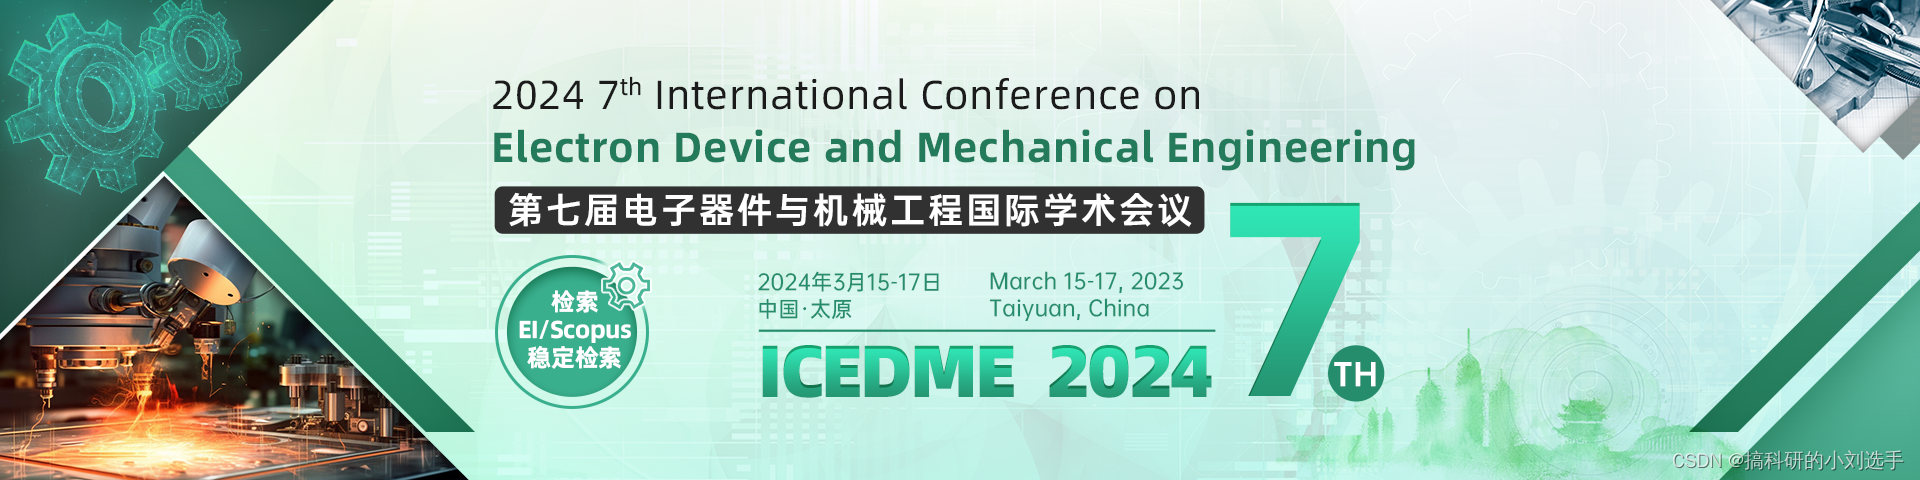 【EI会议征稿通知】第七届电子器件与机械工程国际学术会议（ICEDME 2024）